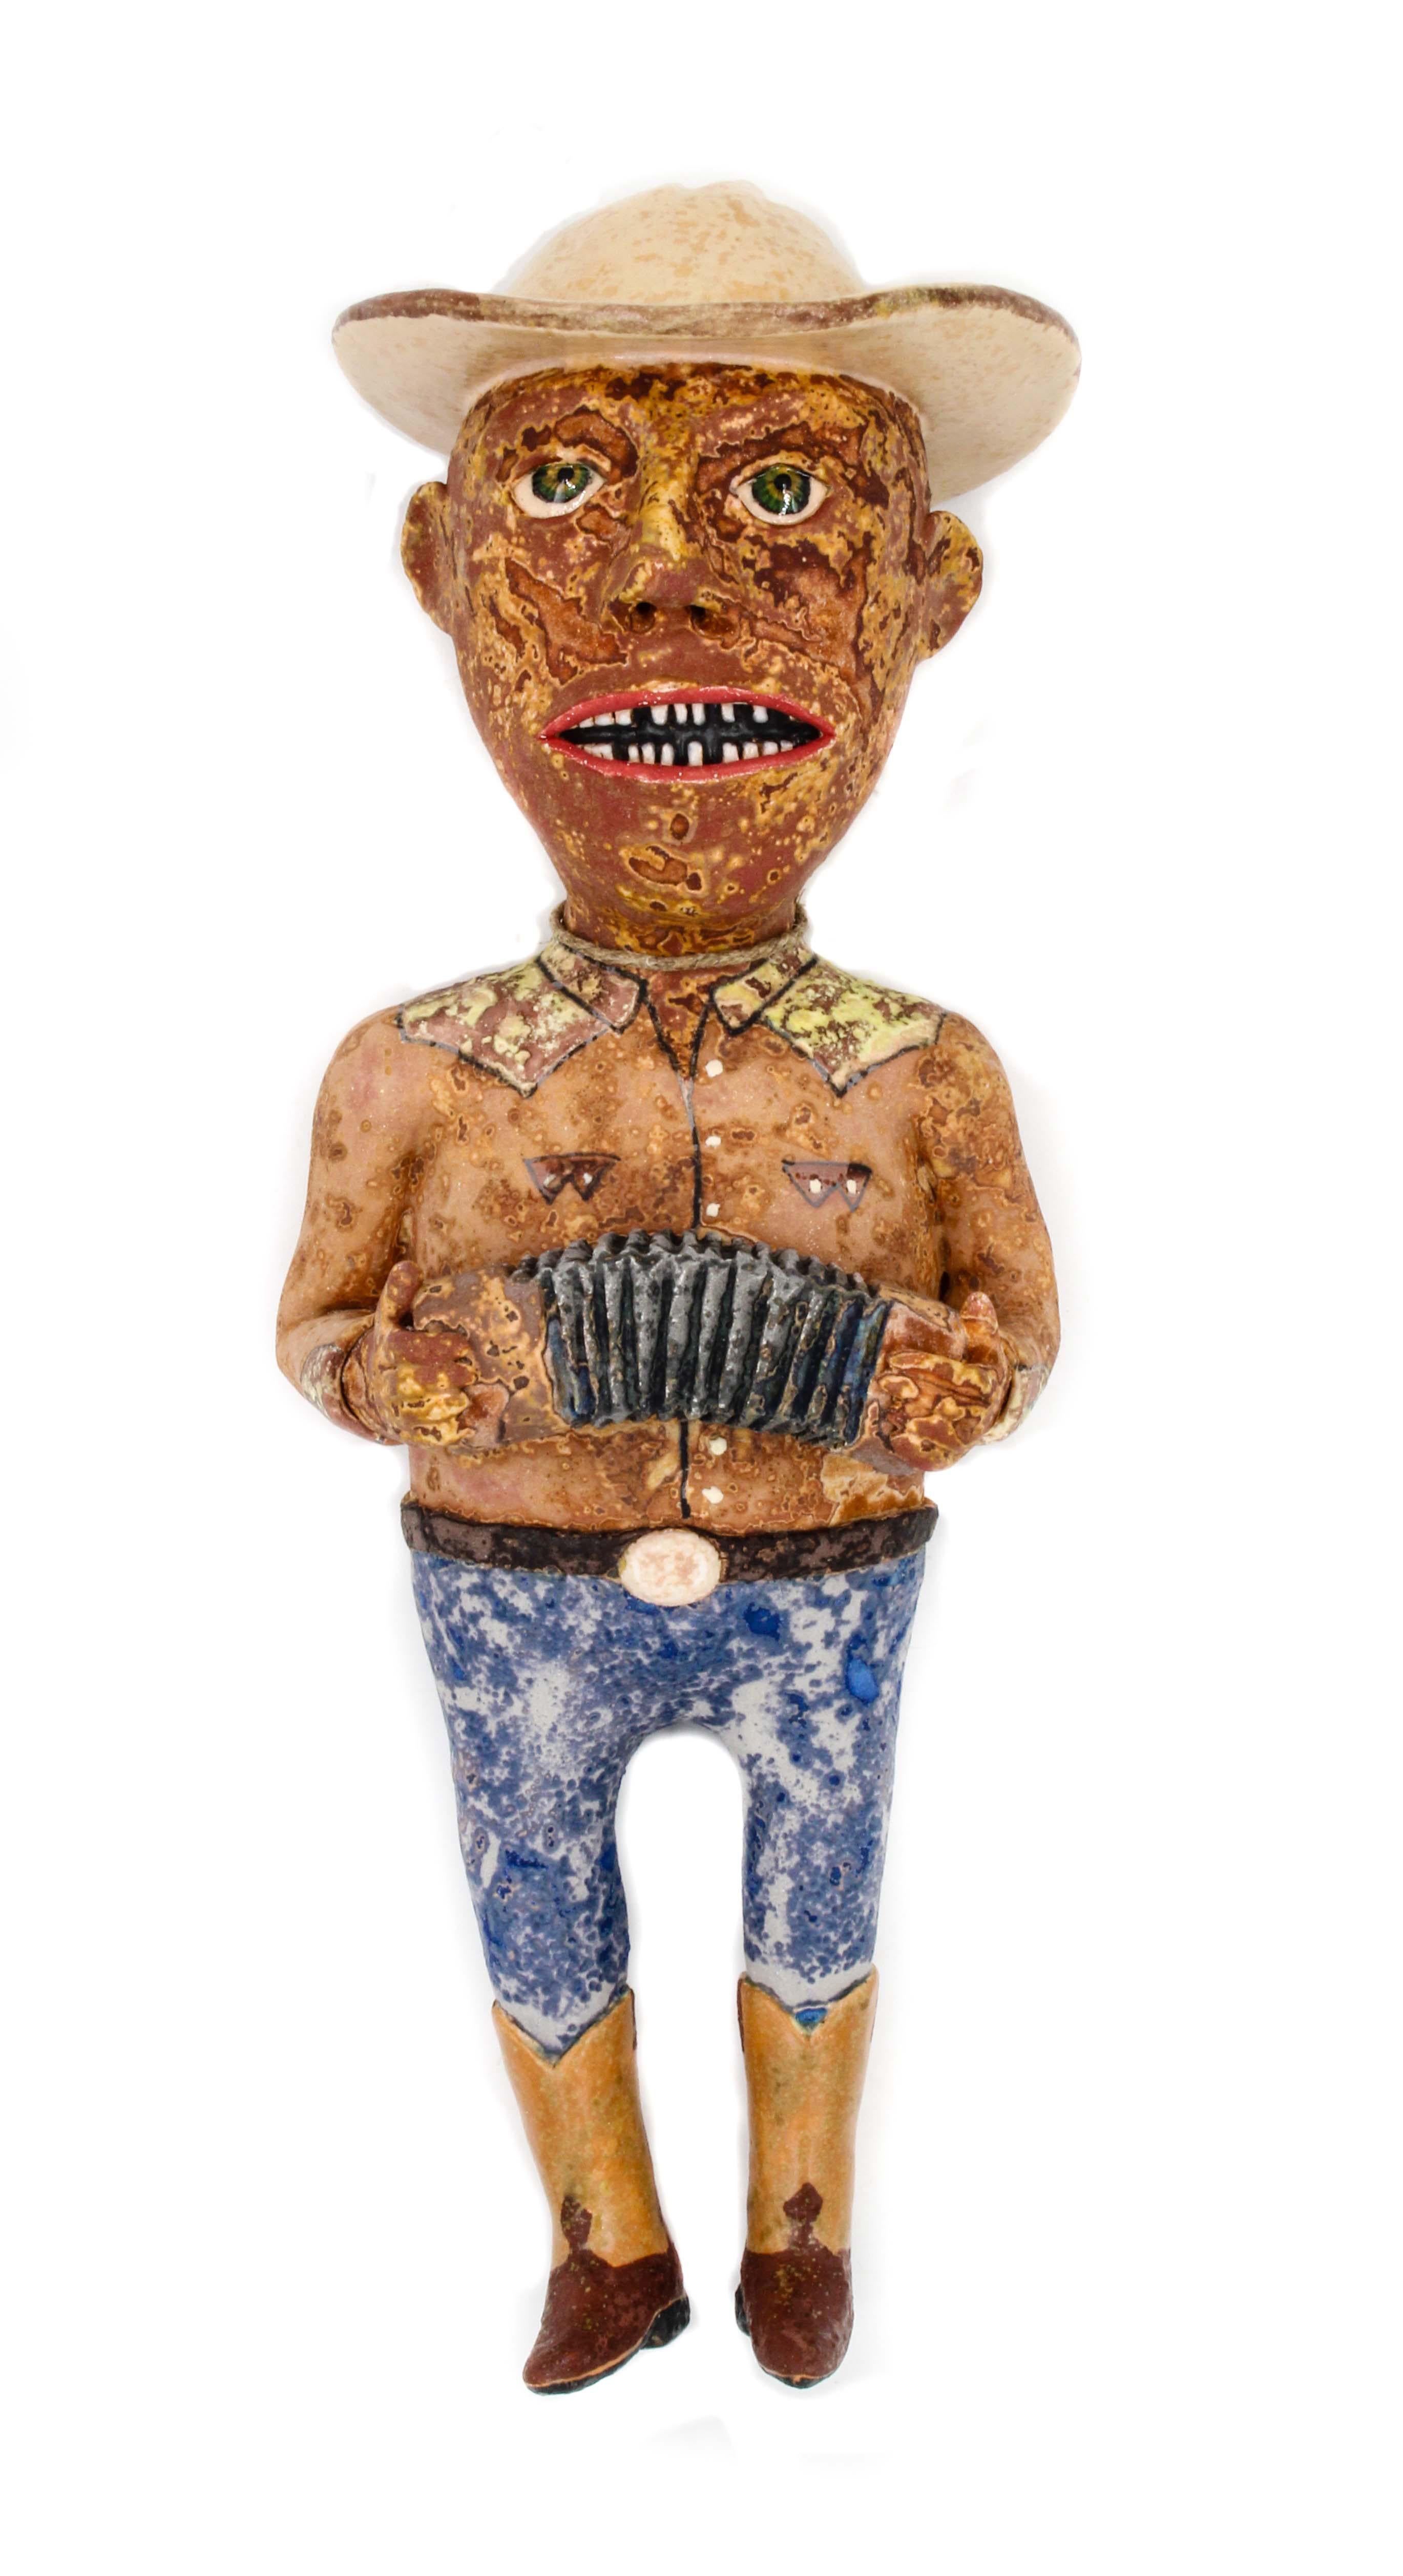 Wesley Anderegg Figurative Sculpture - Accordion Man "Flaco", 2018, ceramic earthenware sculpture